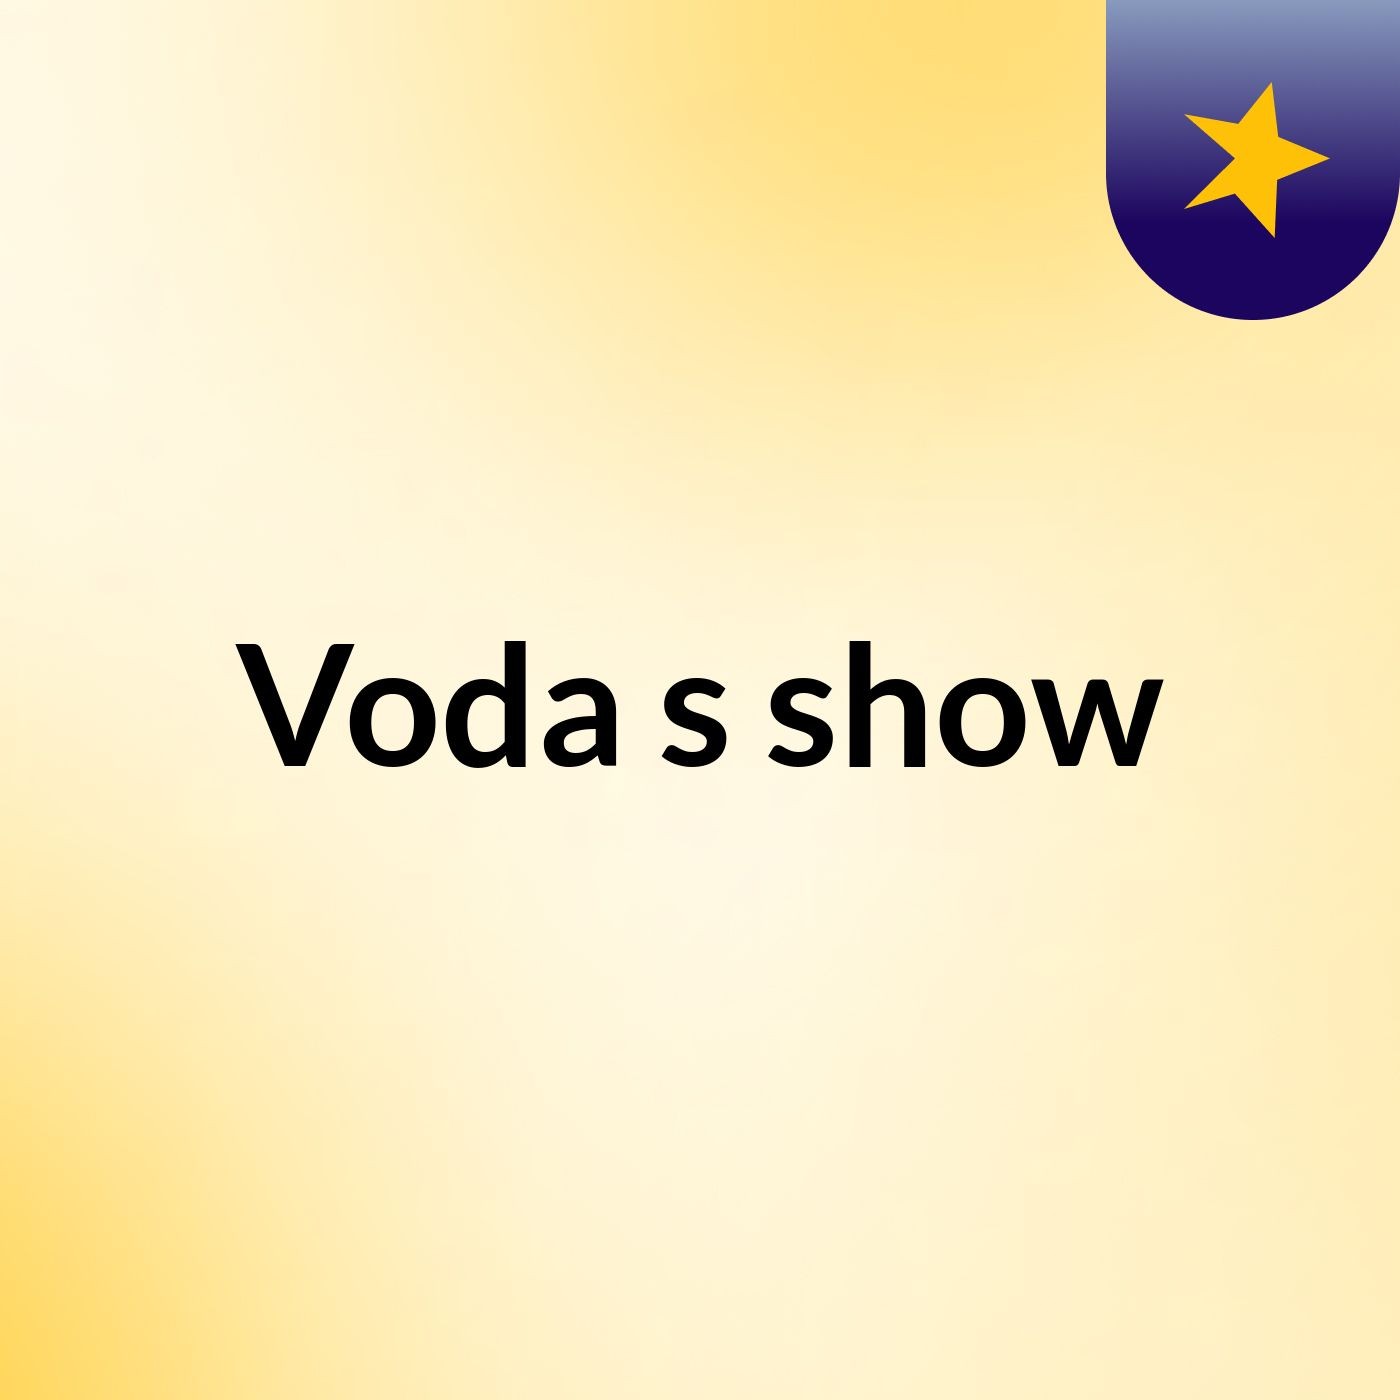 Voda's show